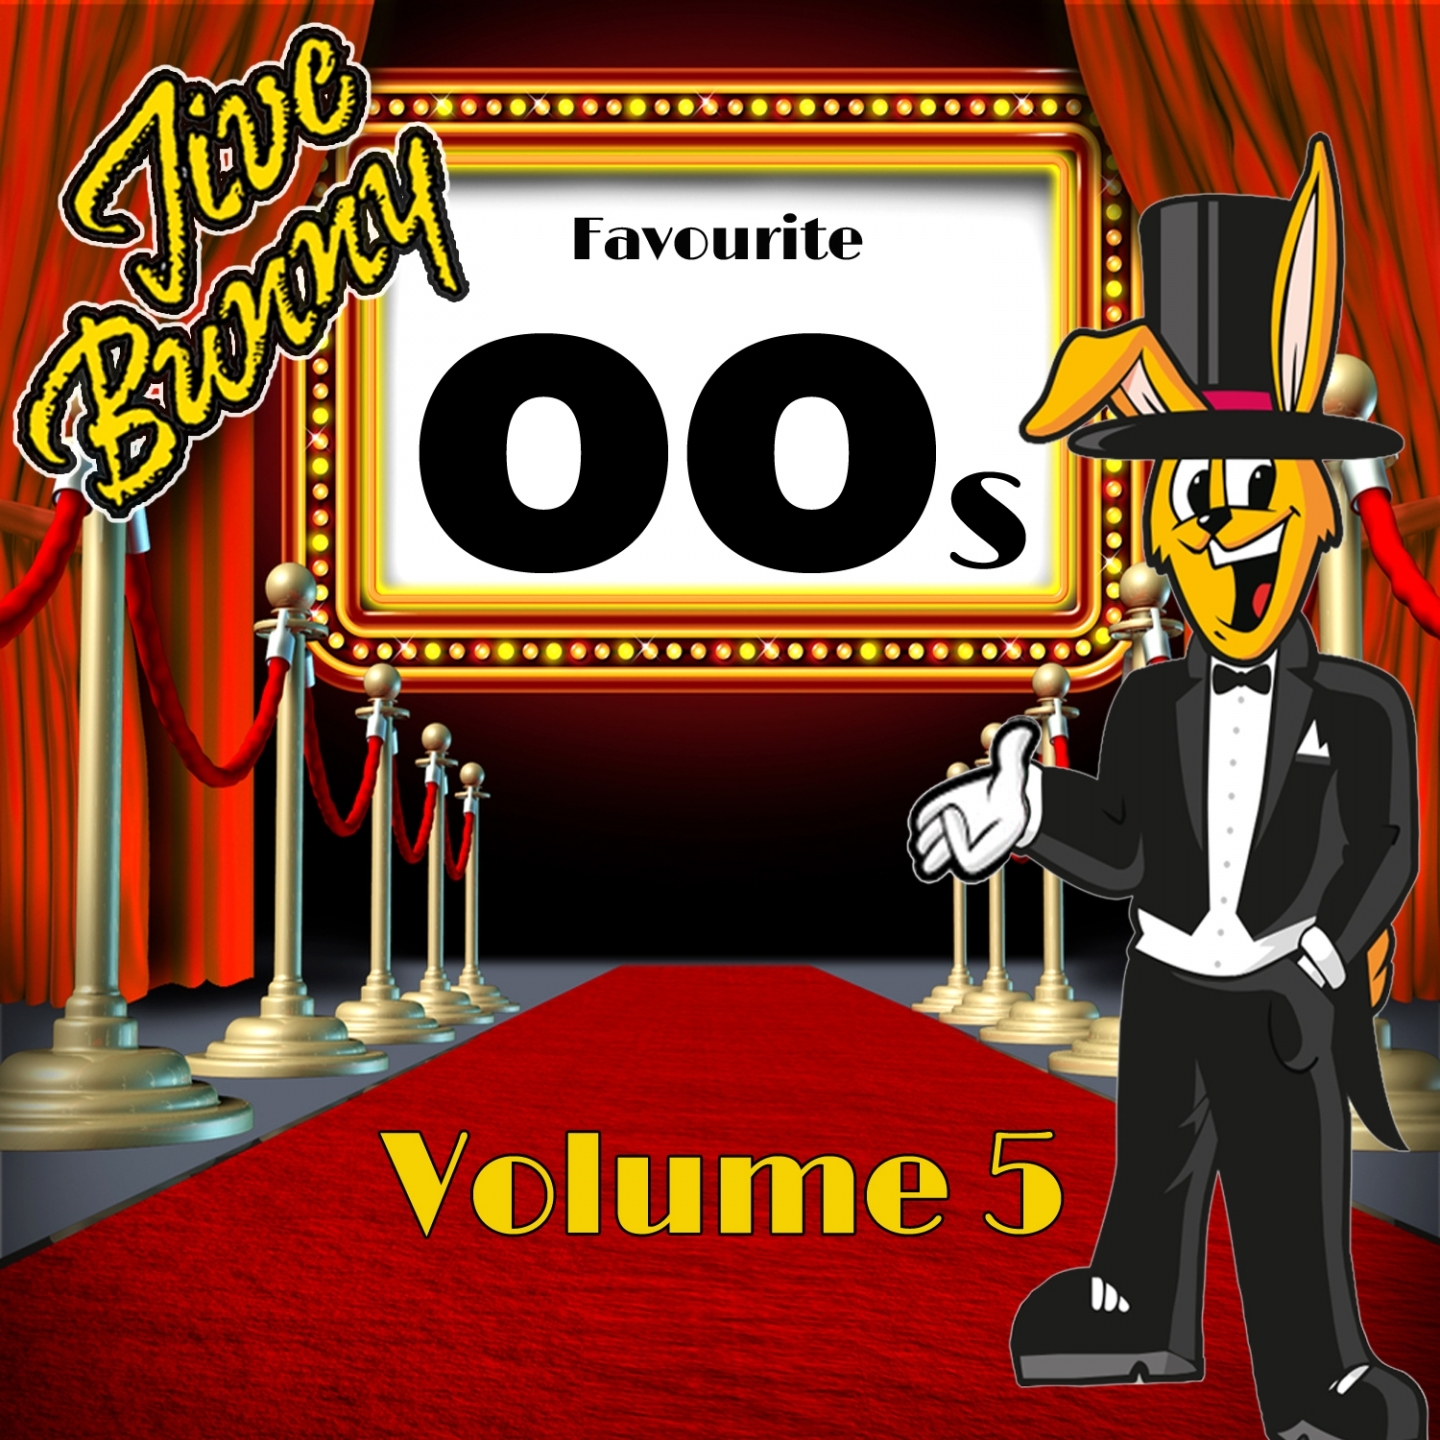 Jive Bunny's Favourite 00's Album, Vol. 5